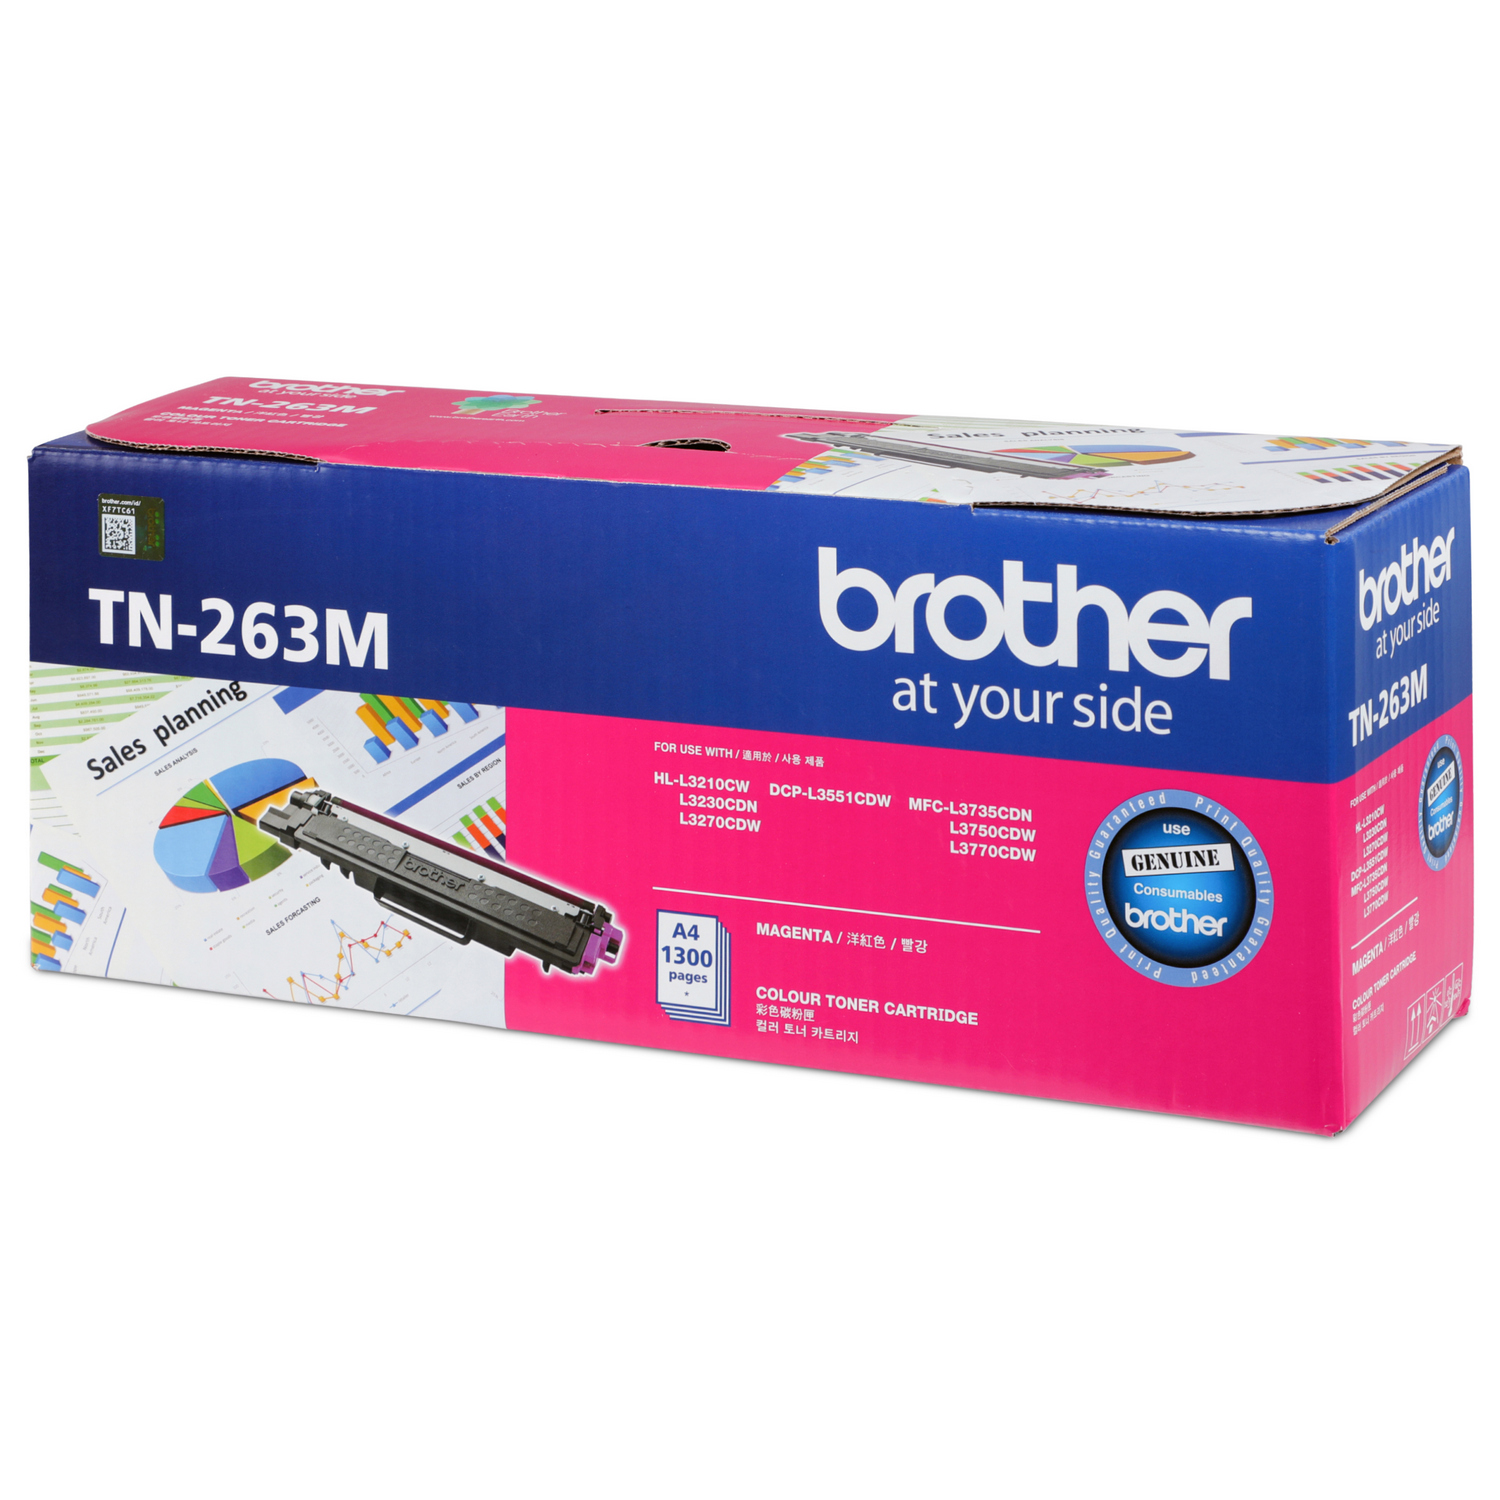 Brother Toner - TN-263M